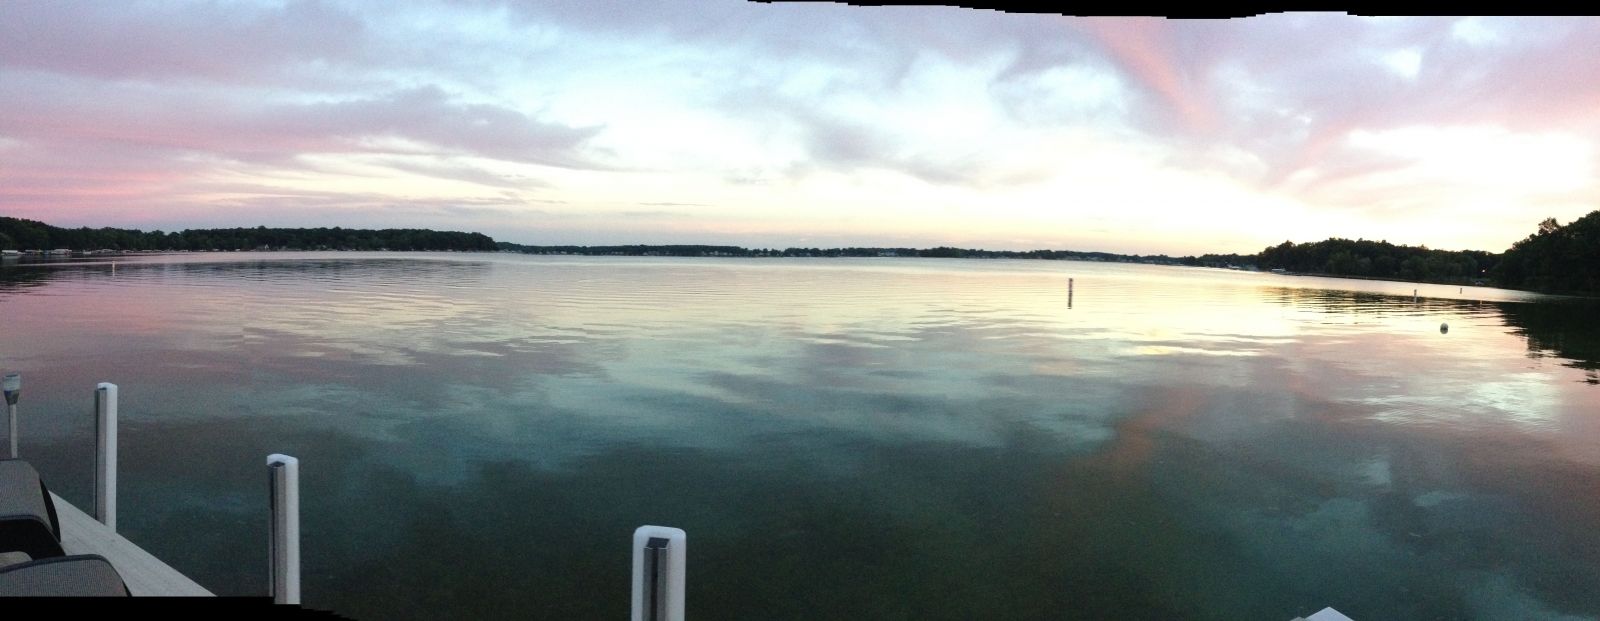 Clear Lake Sunset1